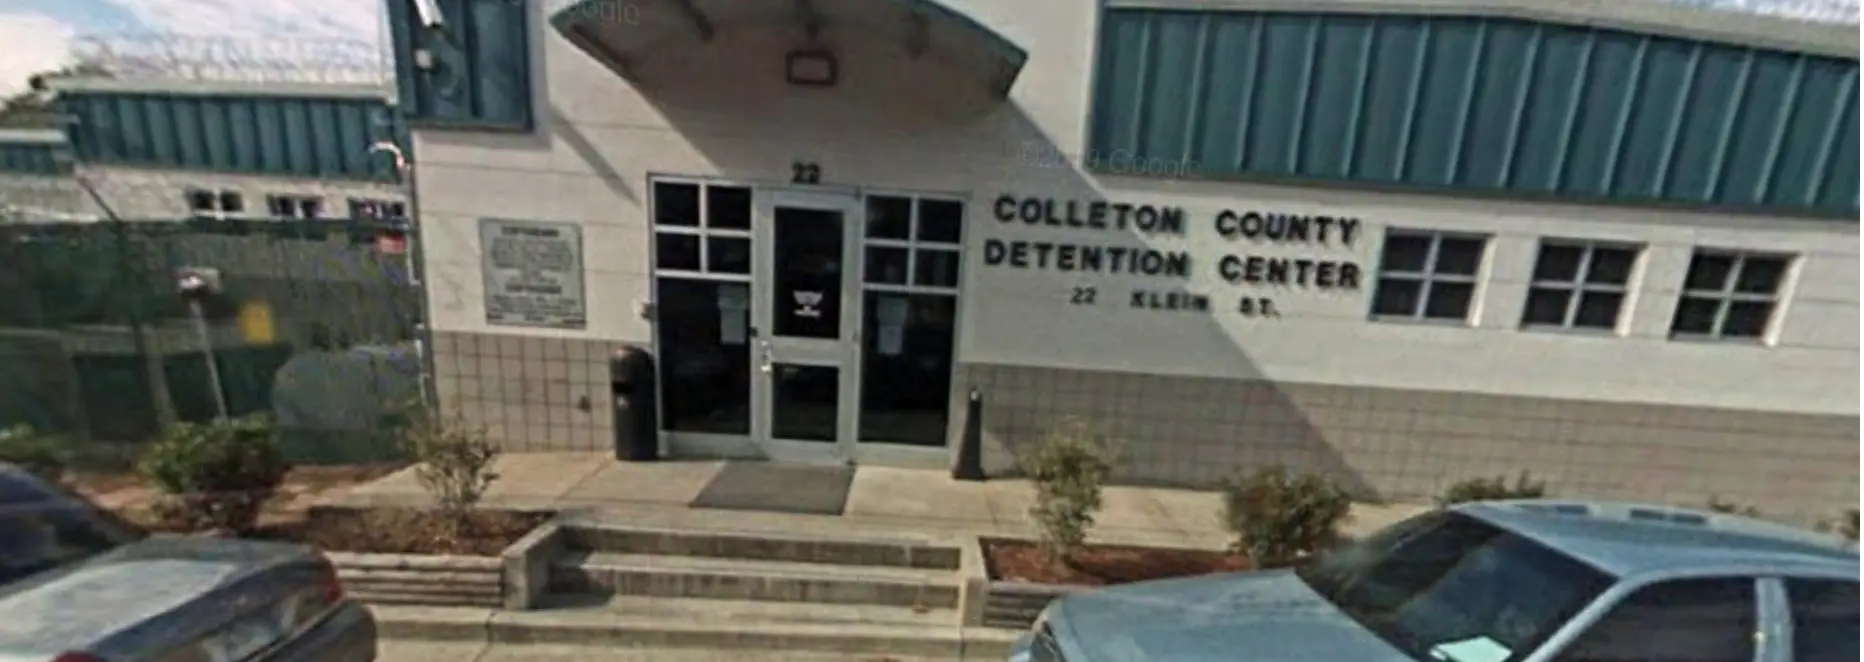 Photos Colleton County Detention Center 1